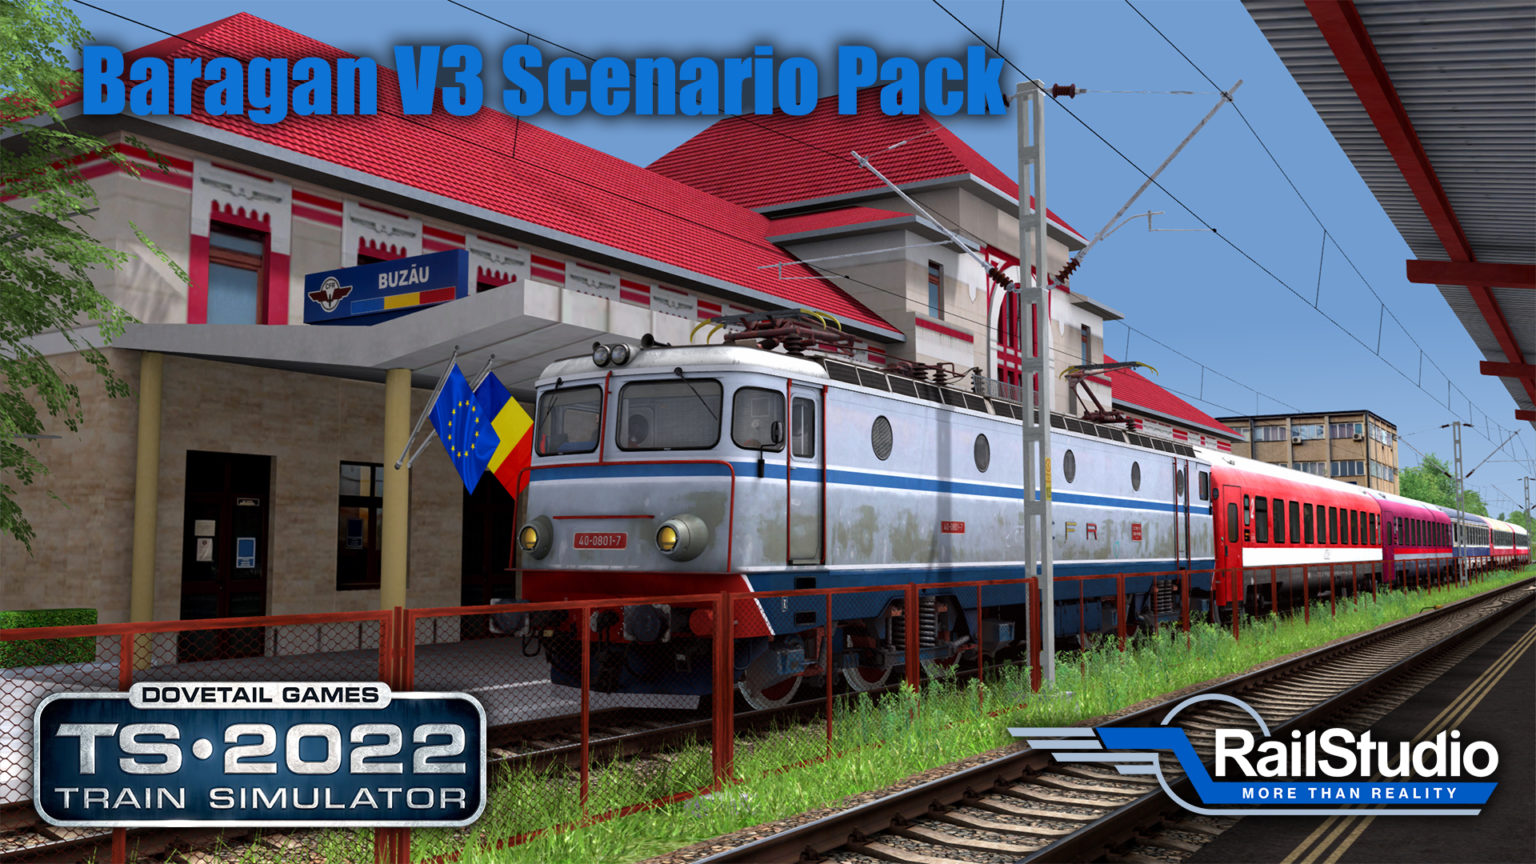 Baragan V3 Scenario Pack